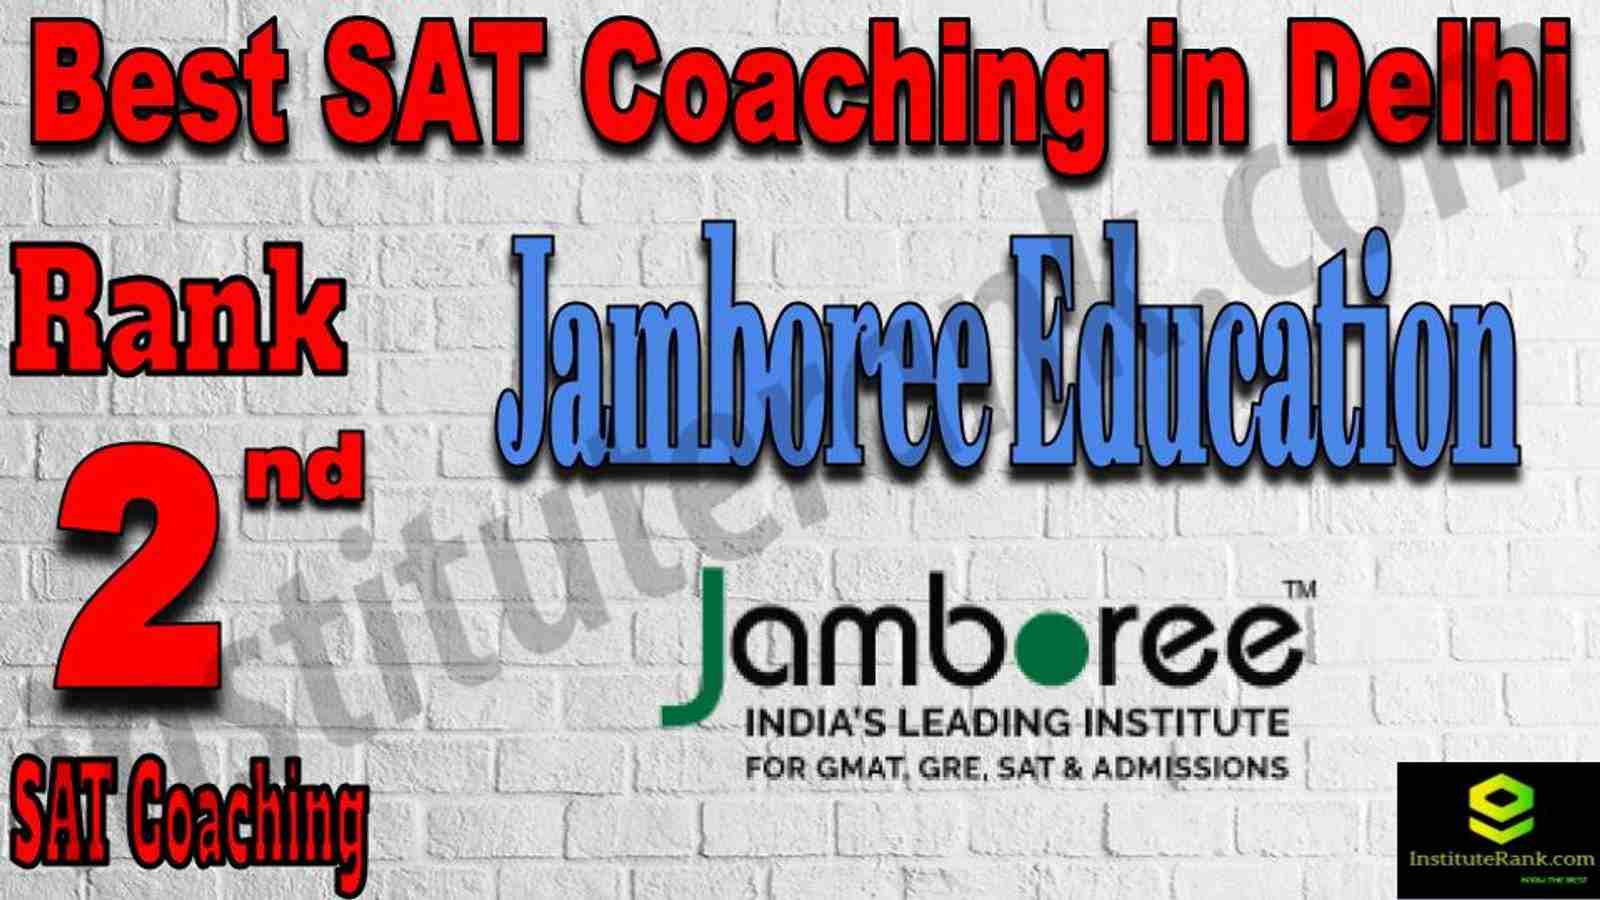 Rank 2 Best SAT Coaching in Delhi